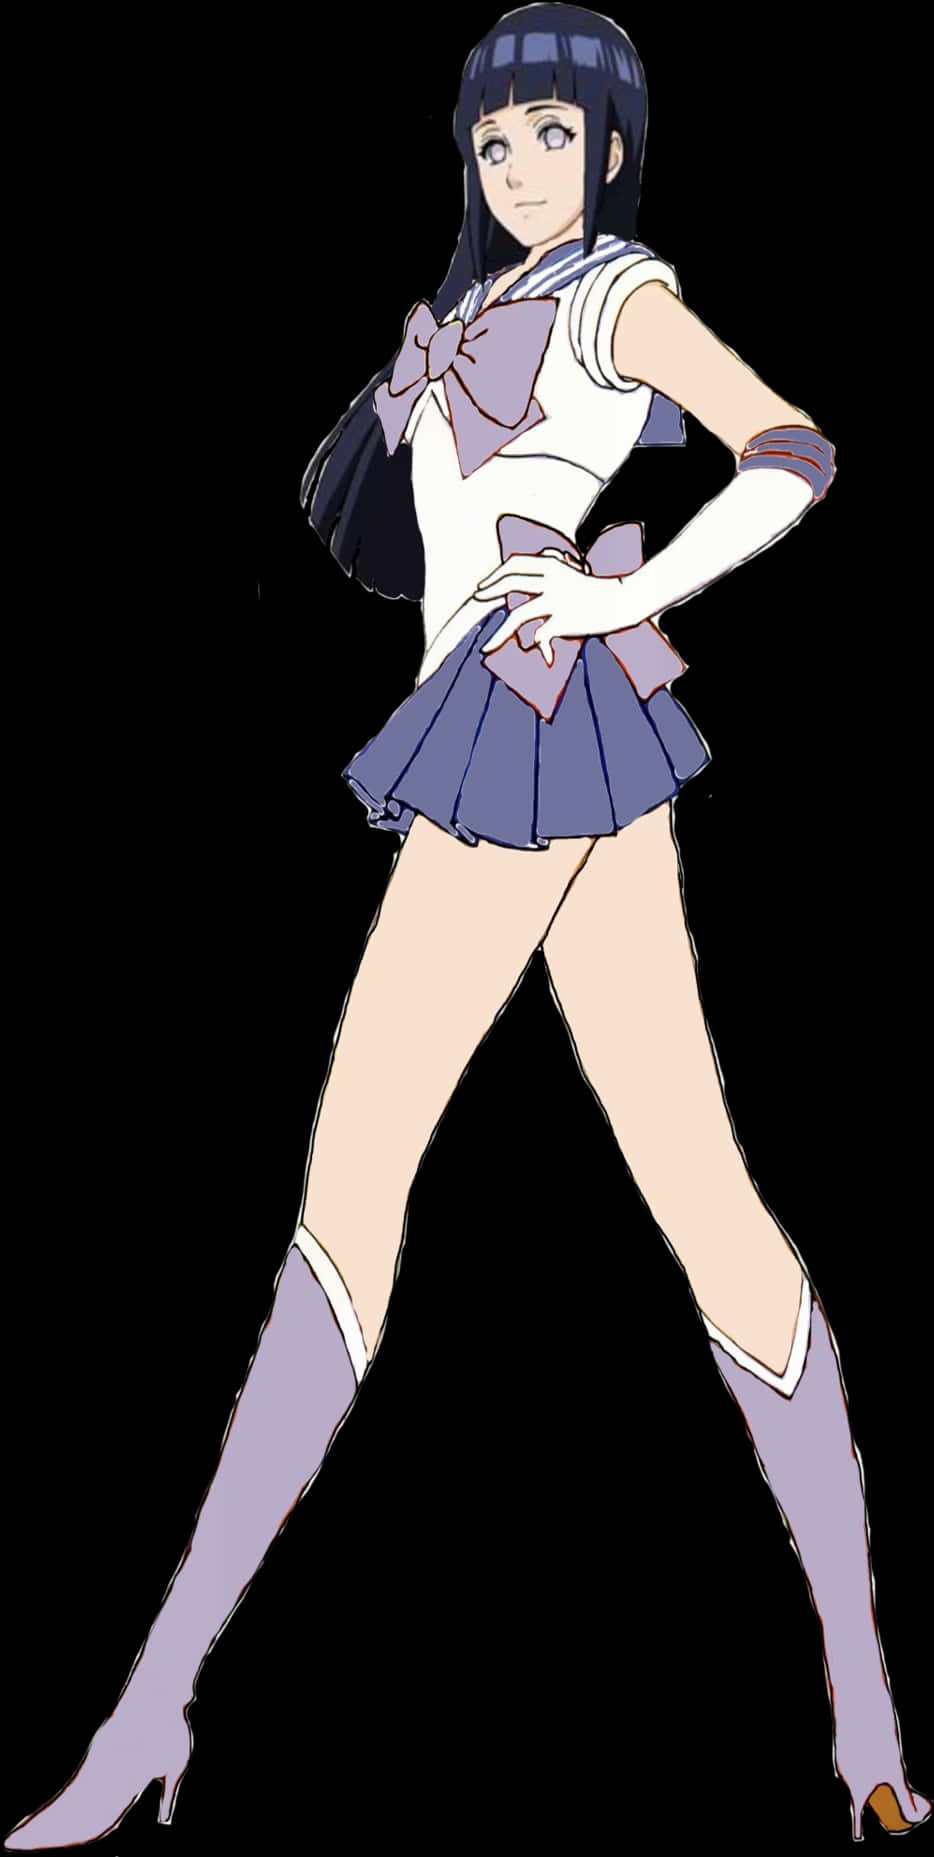 Sailor Uniform Anime Character PNG image